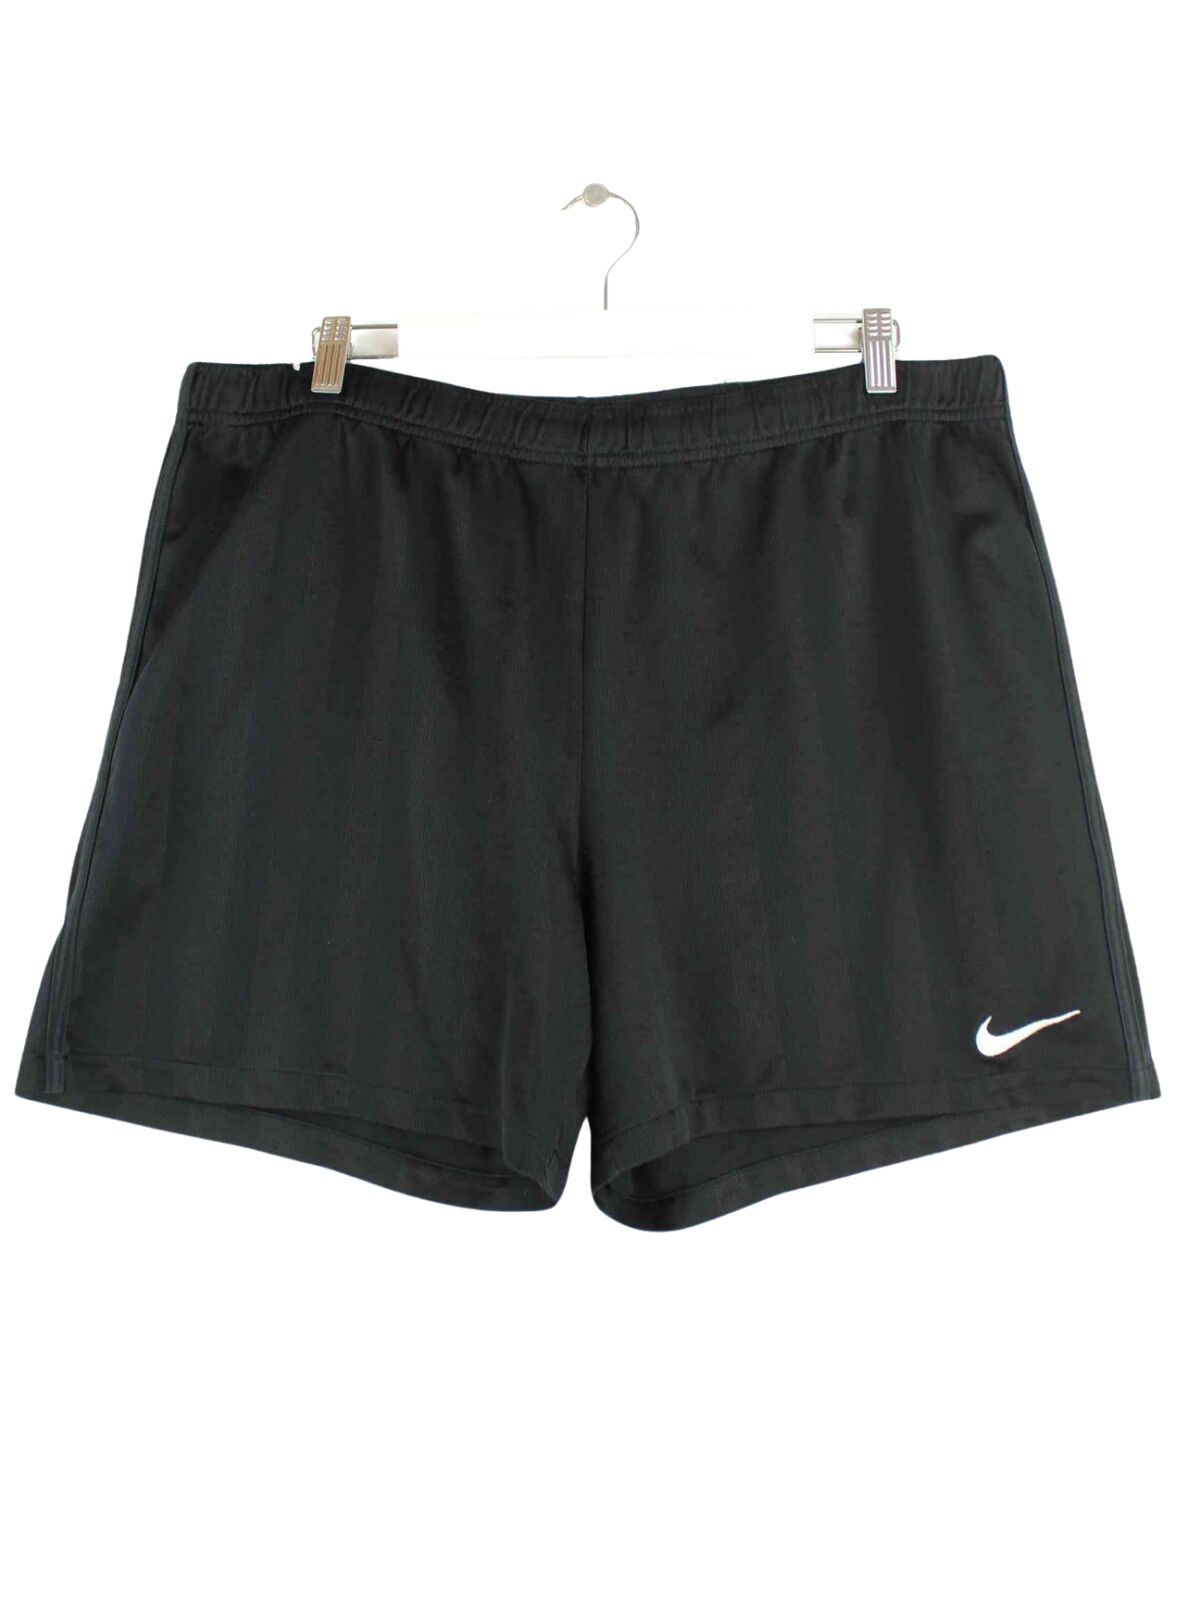 Nike Sport Shorts Schwarz L (front image)